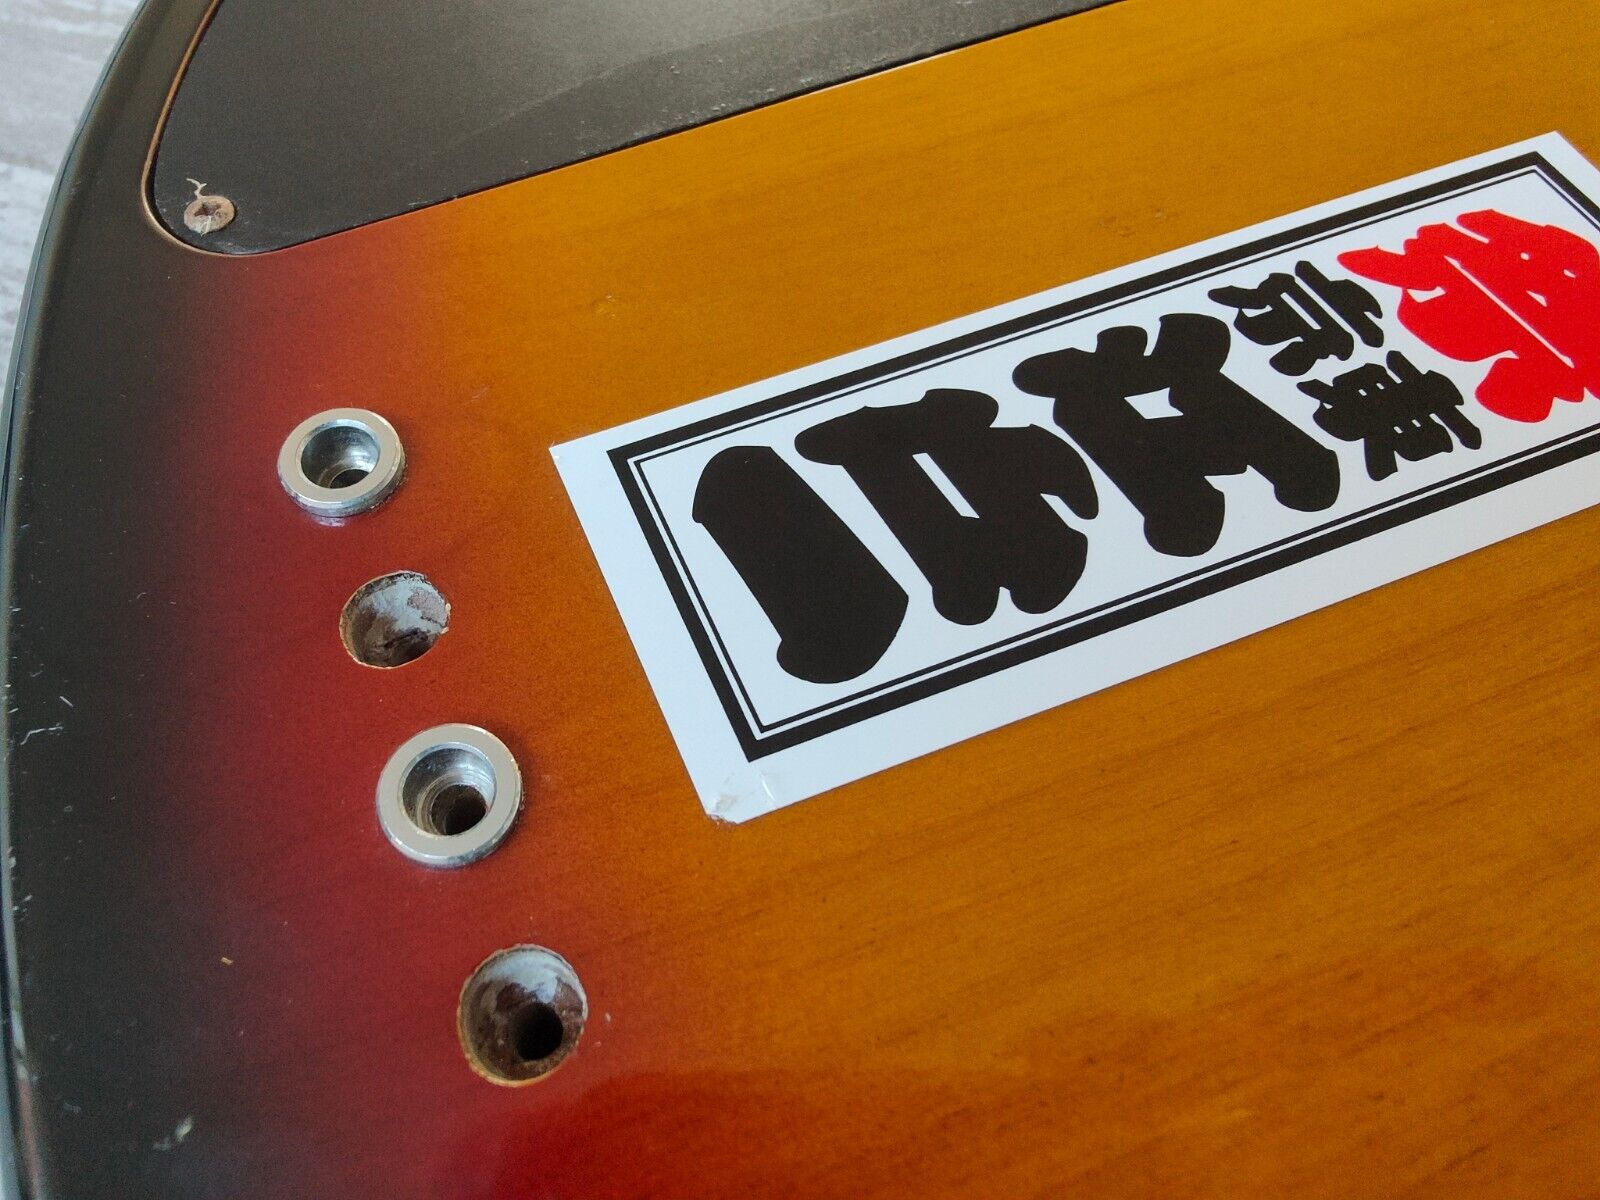 1995 Ibanez Japan ATK-100 Bass Guitar (Sunburst)